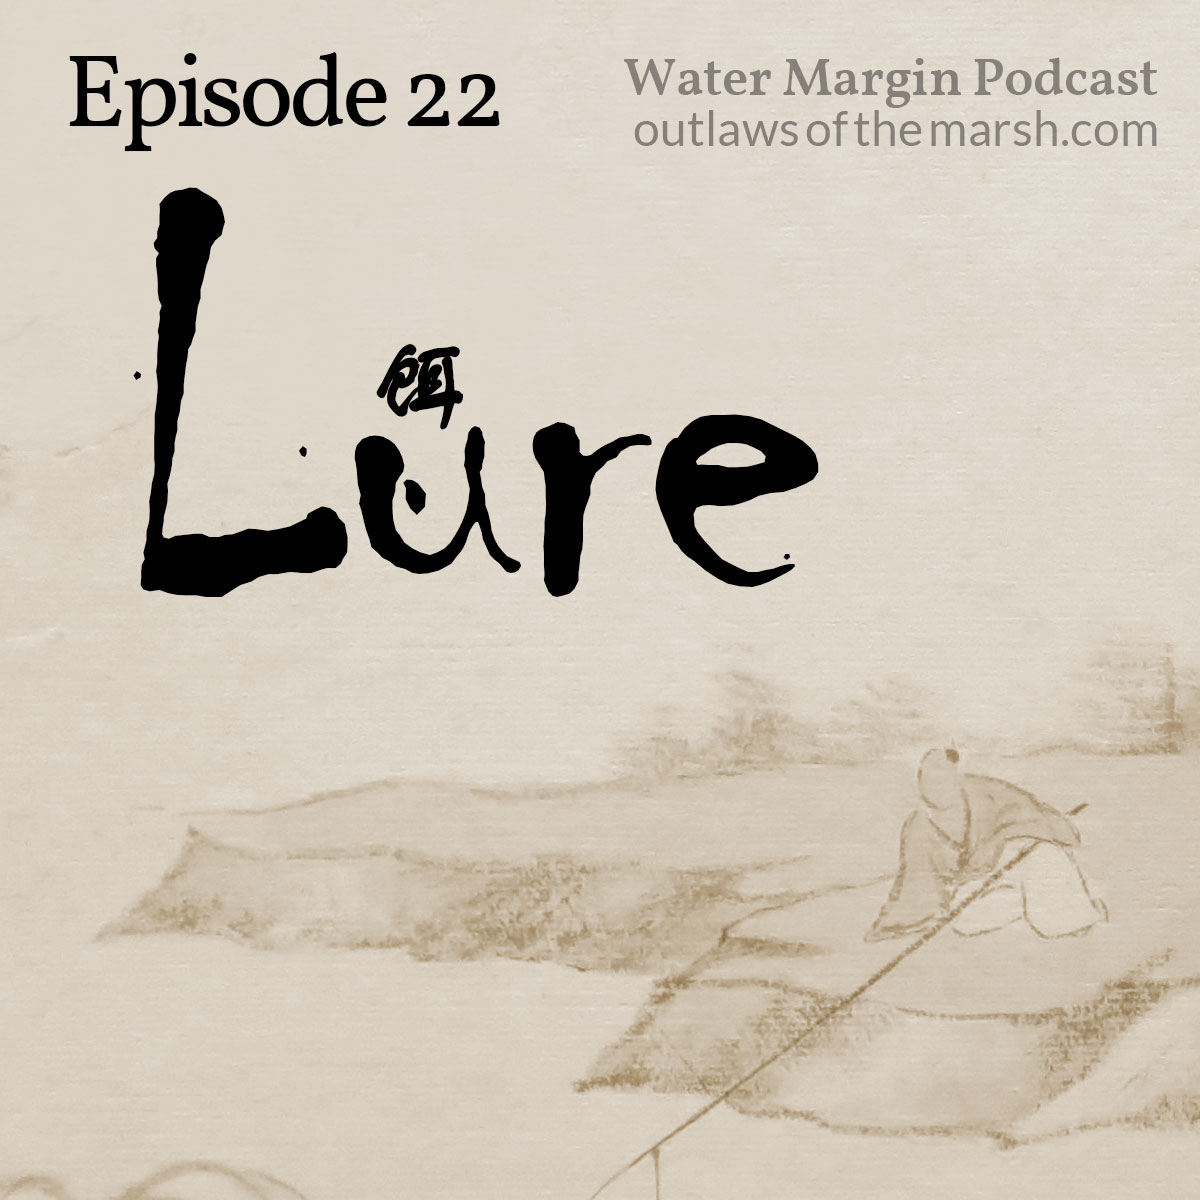 Water Margin Podcast: Episode 022